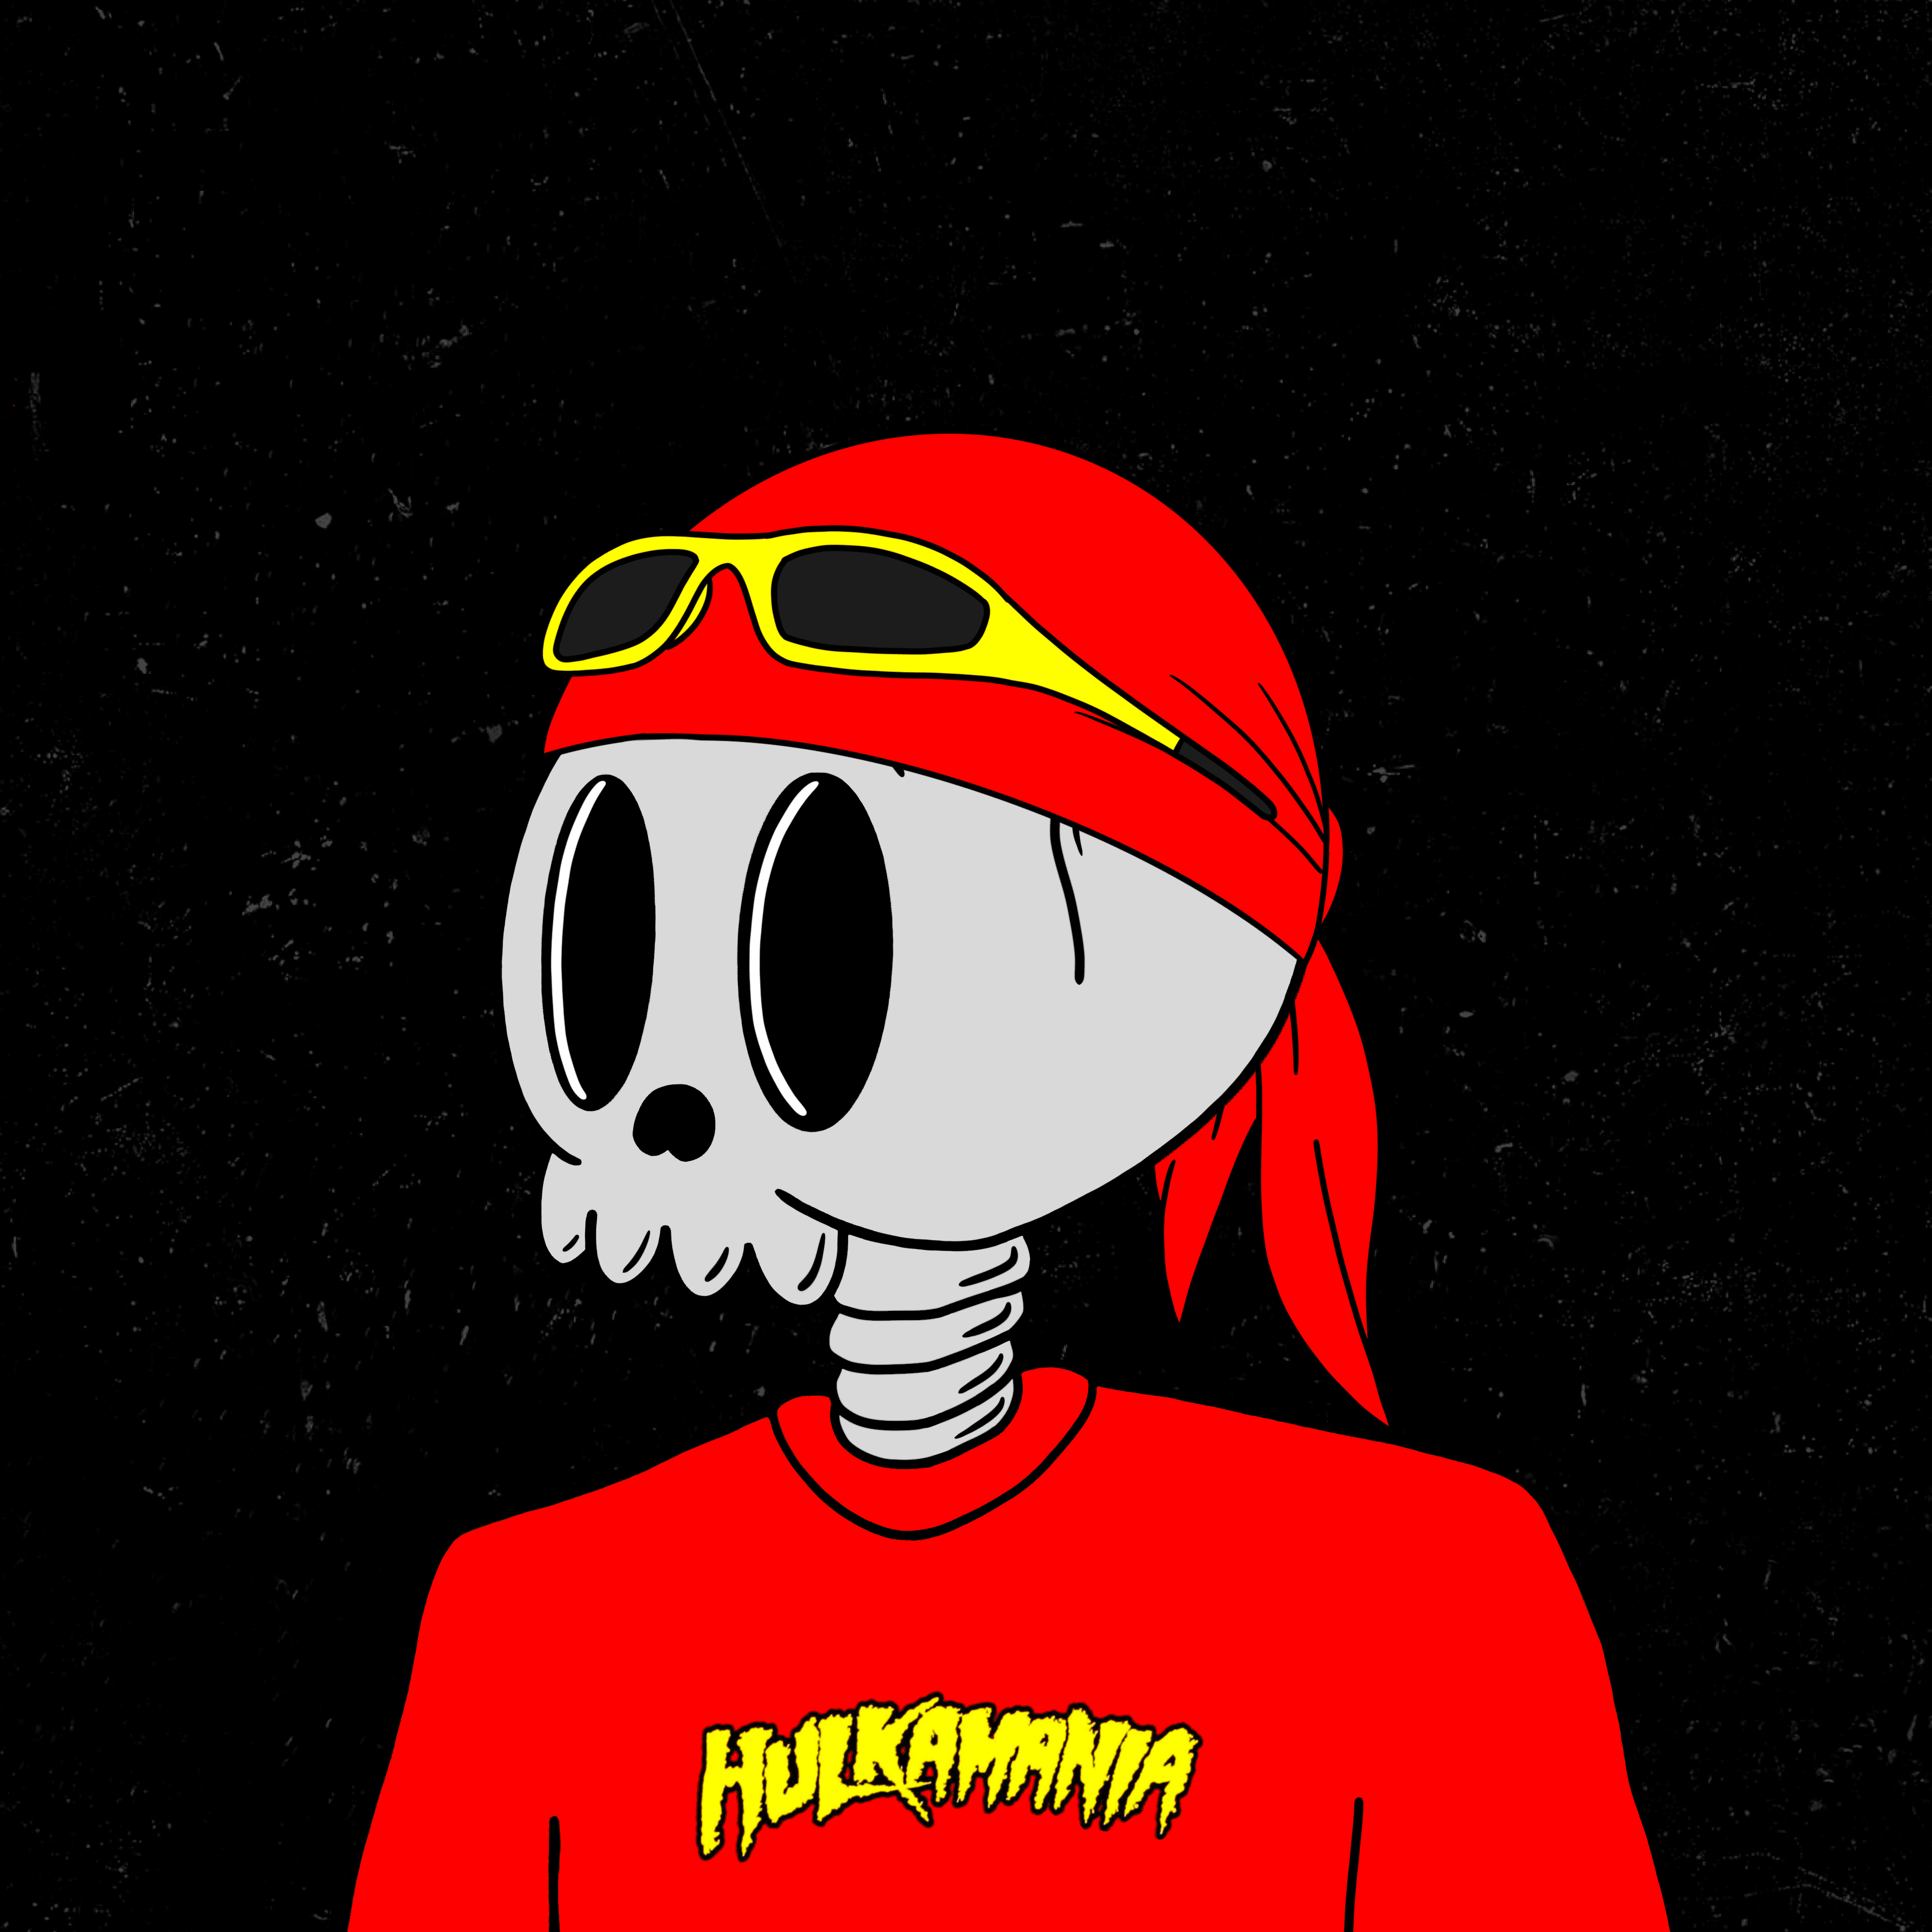 Skeleton 571: HULKAMANIA